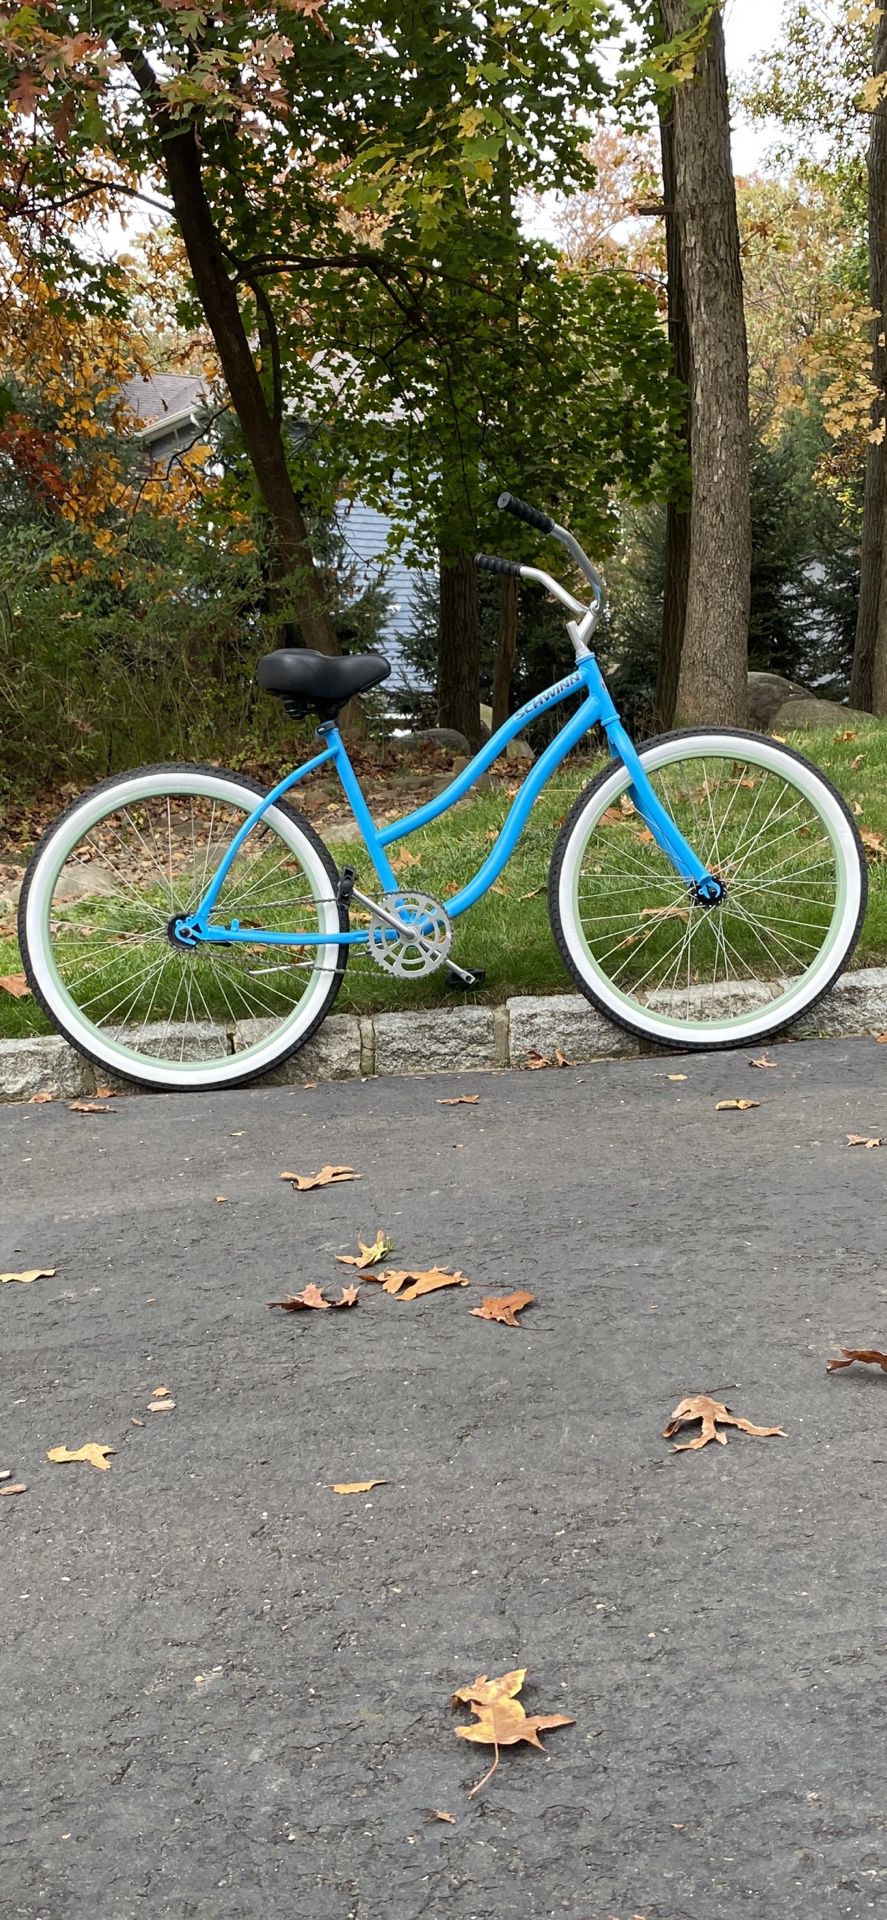 26” Schwinn Beach Cruiser Bike Bicycle Like New Condition